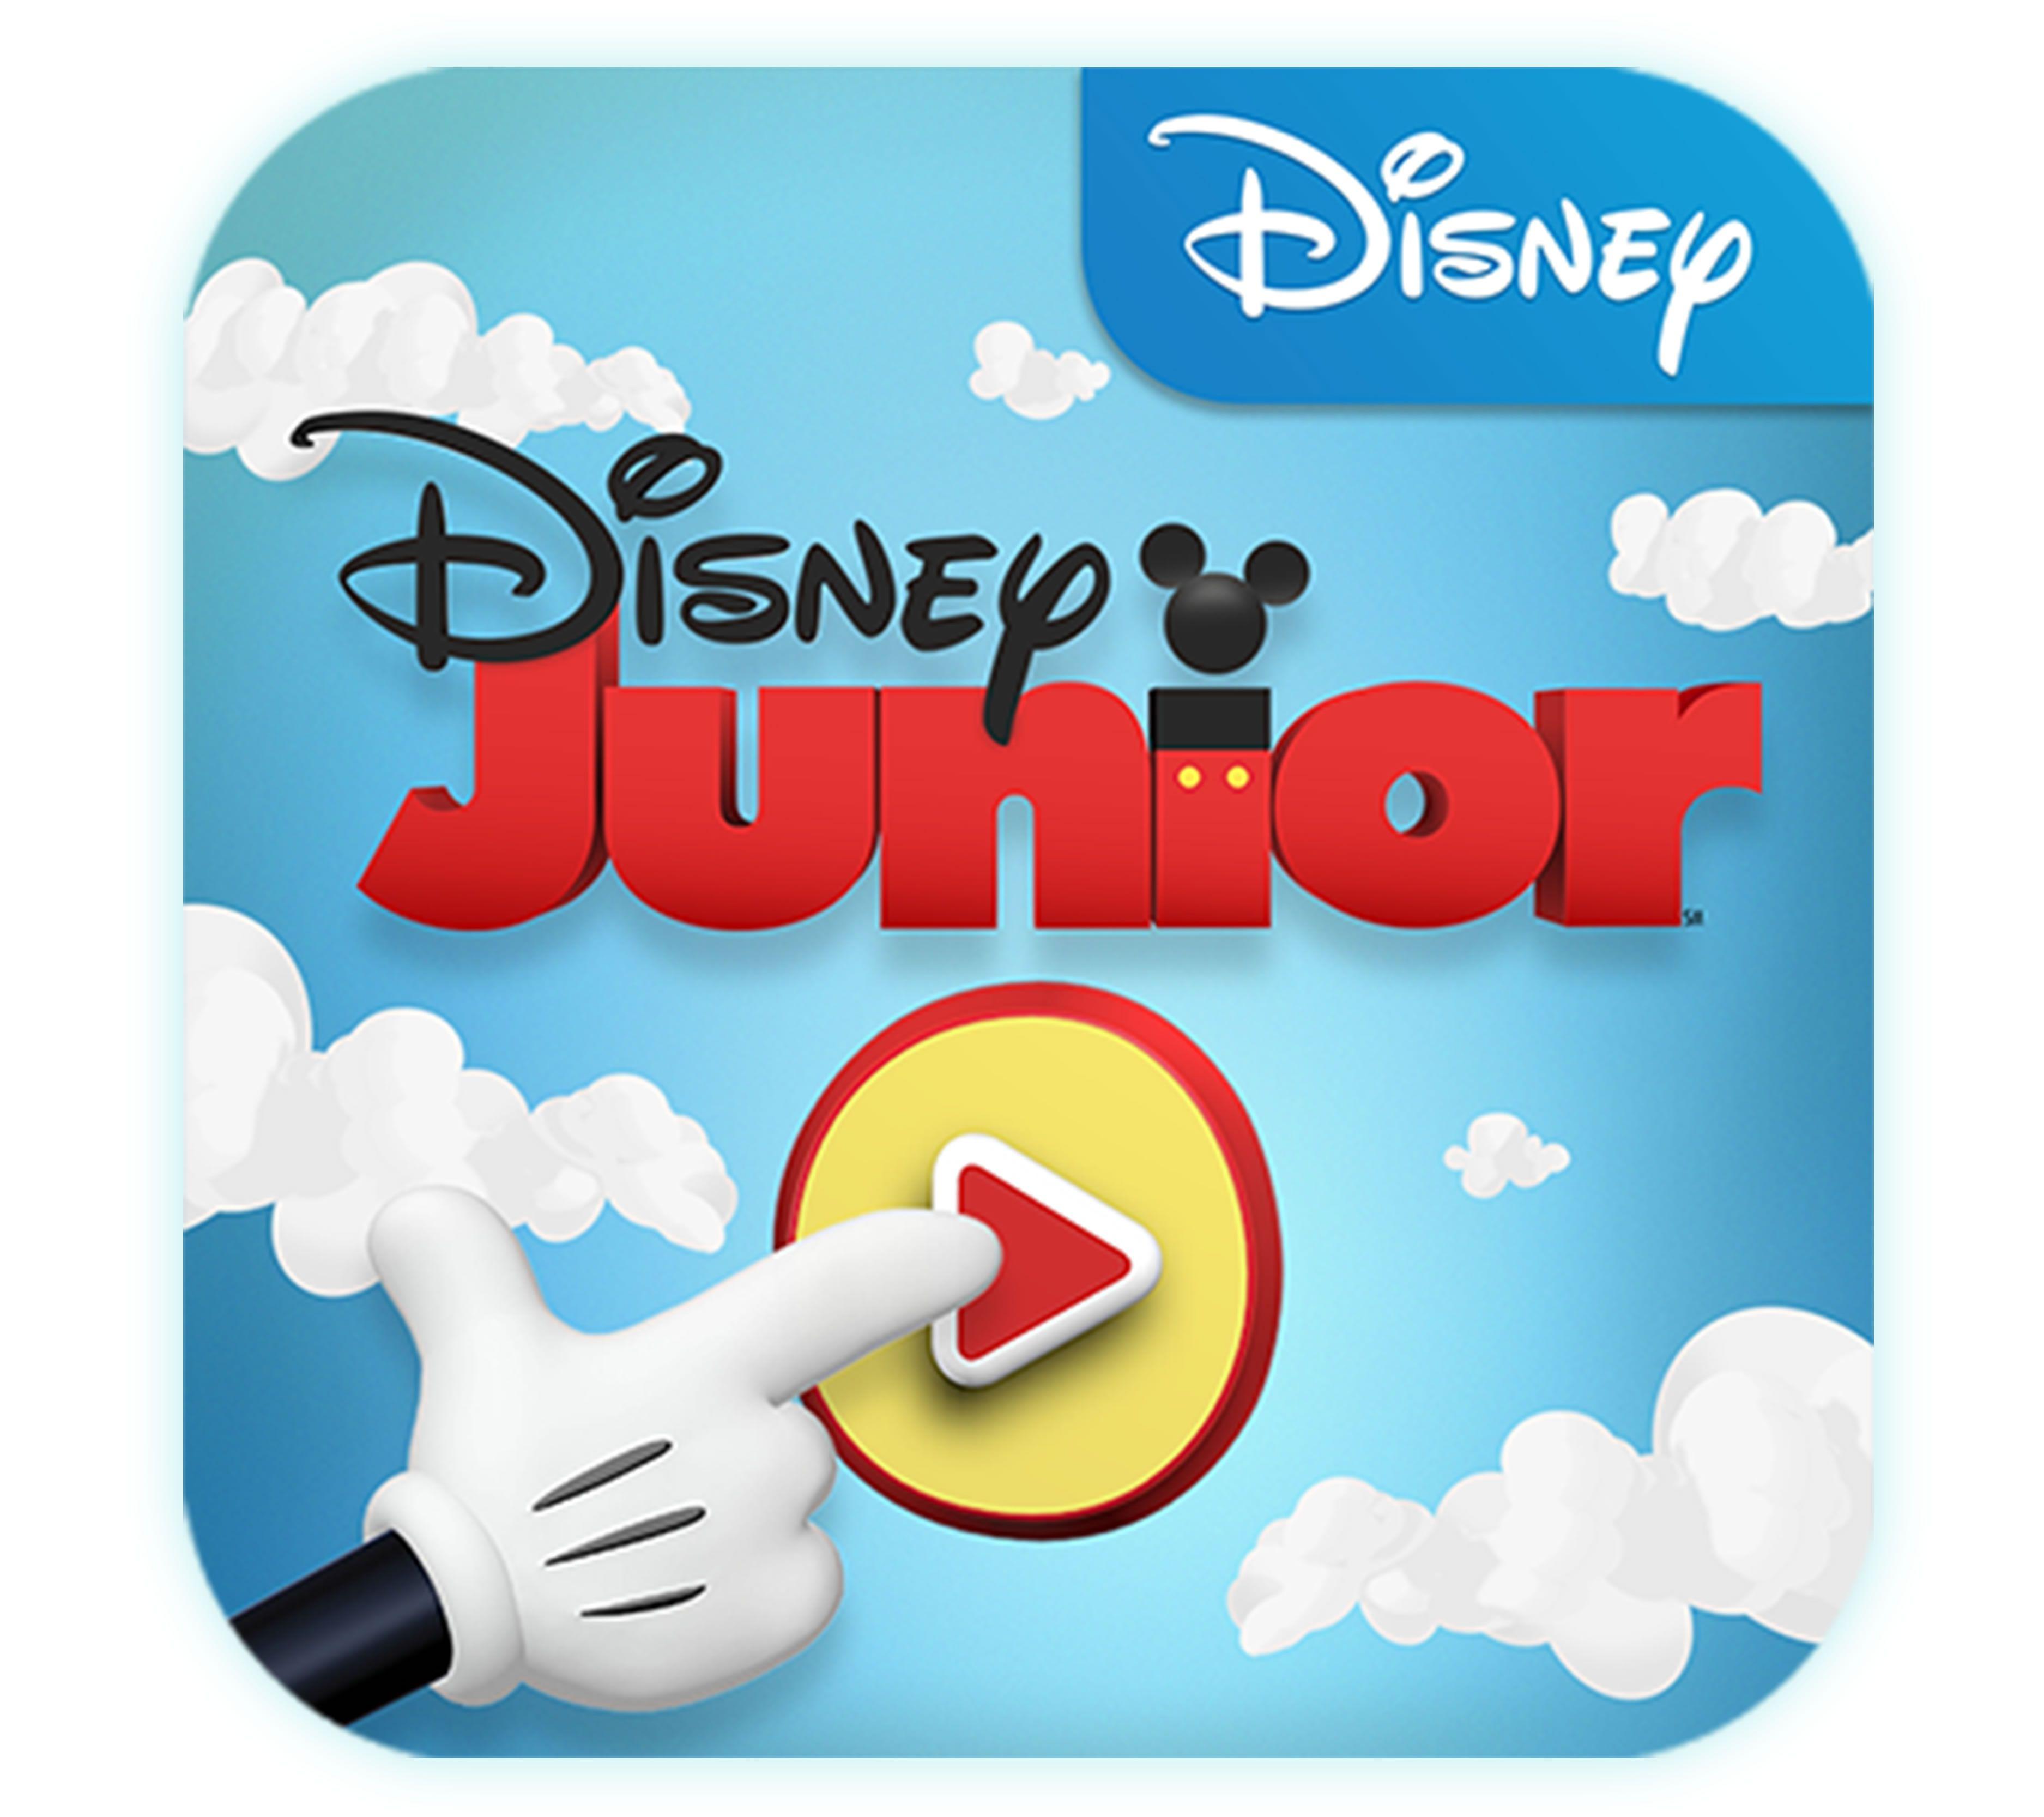 Disney Junior the Channel Logo - Disney Jr available on OSN in Arabic – Digital TV Europe